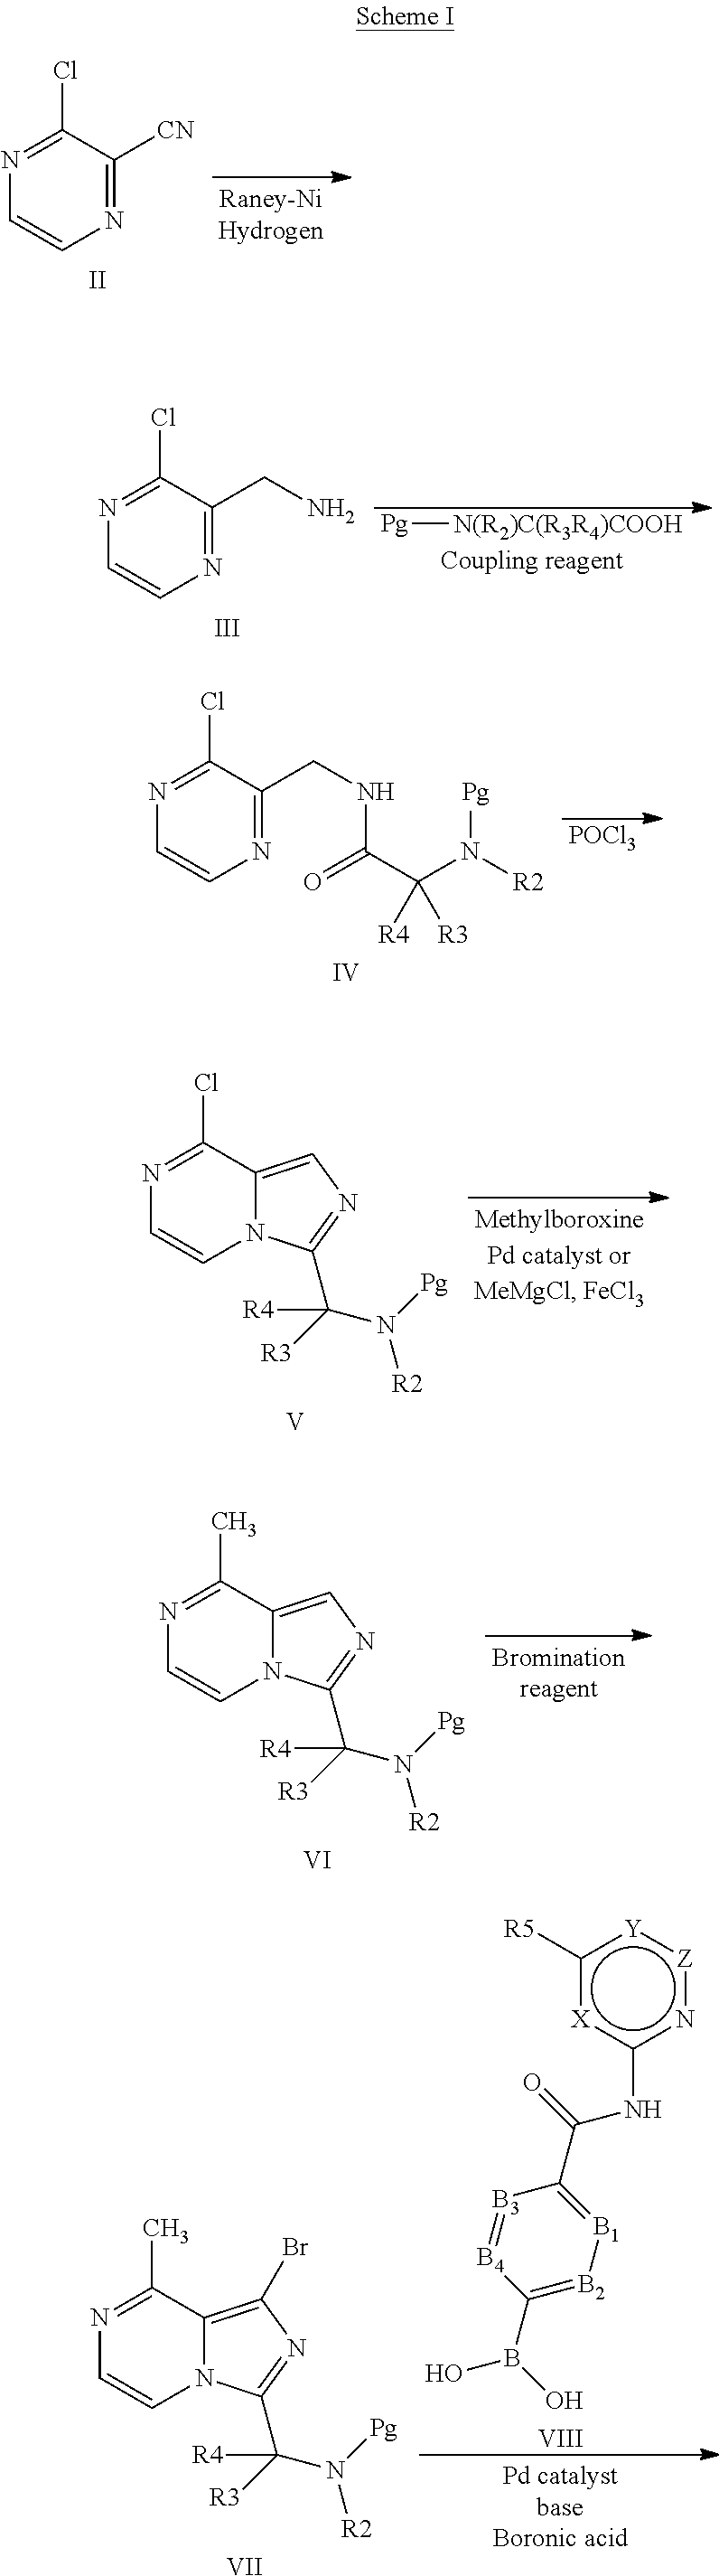 4-imidazopyridazin-1-yl-benzamides and 4-imidazotriazin-1-yl-benzamides btk inhibitors